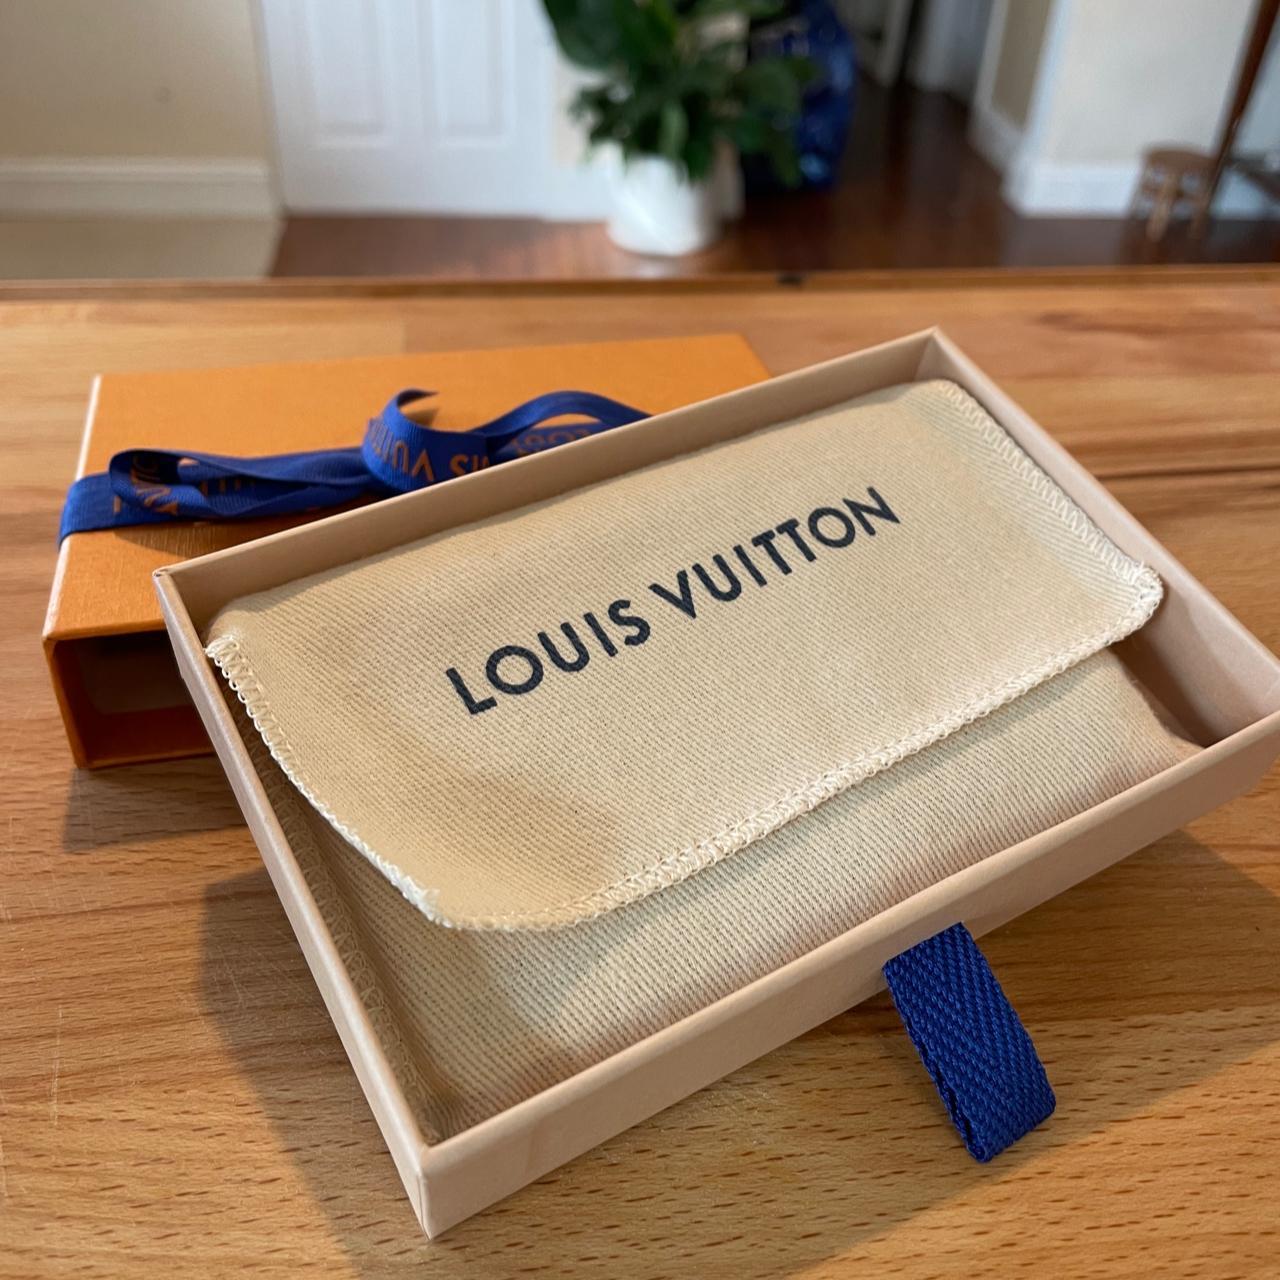 Authentic Louis Vuitton monogram wallet 🩷 so roomy - Depop